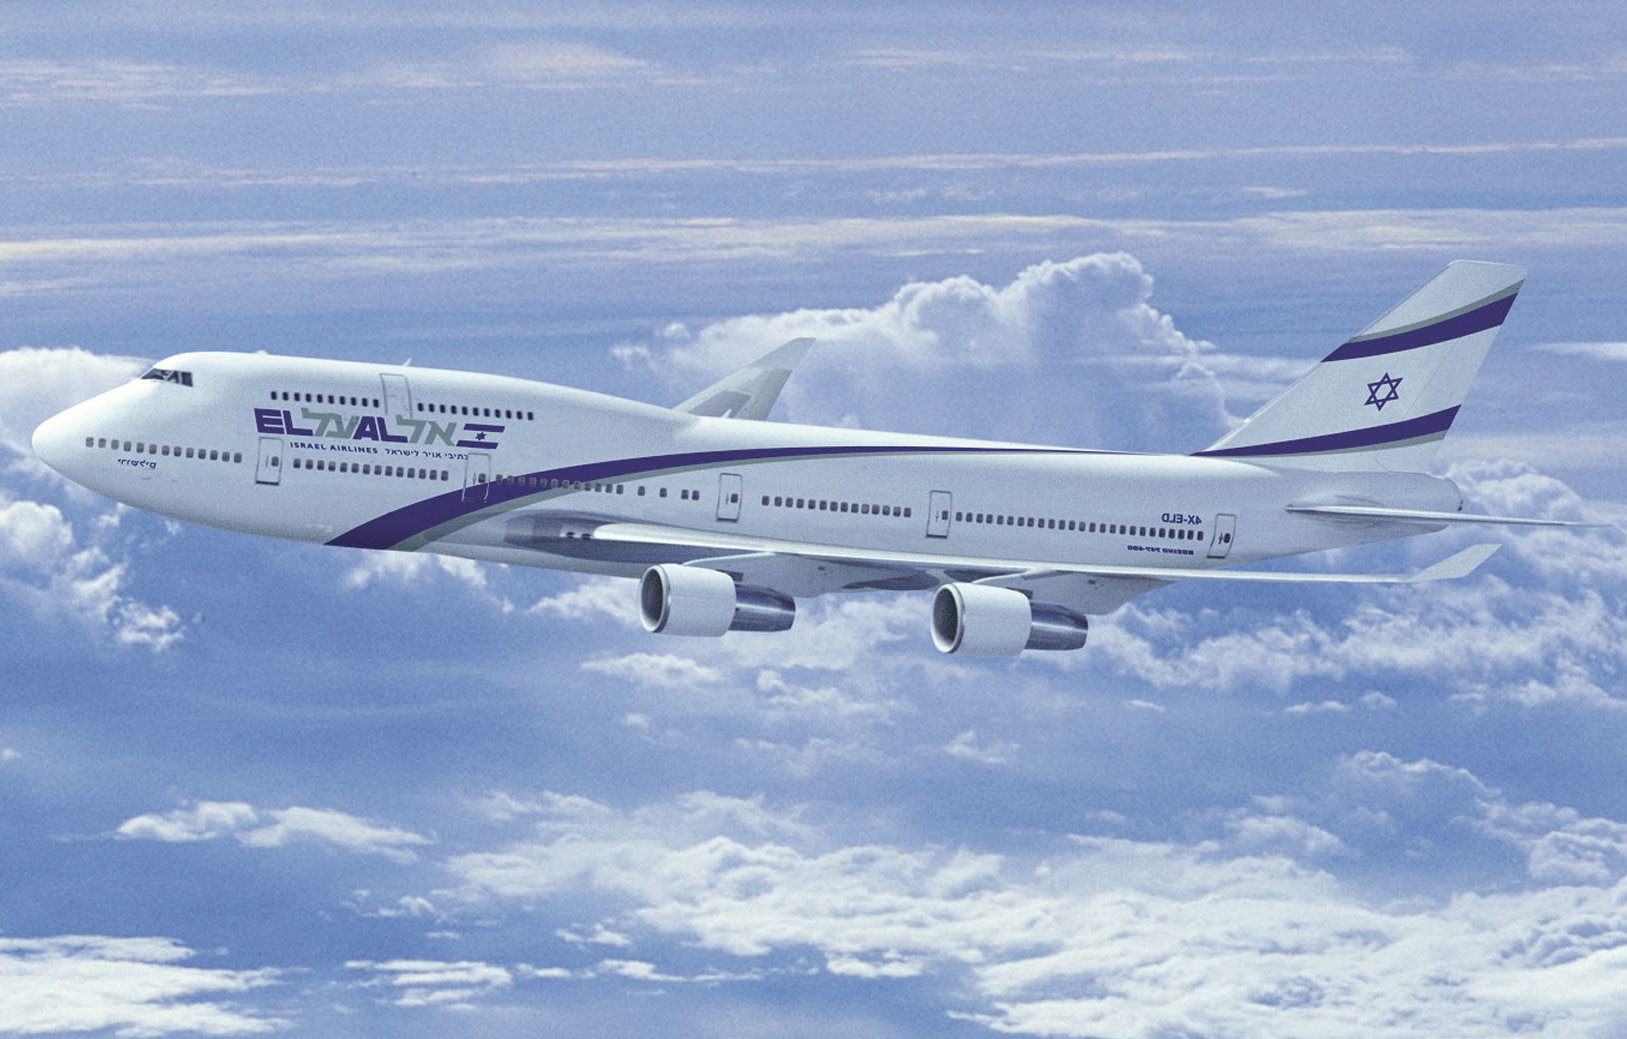 Рейс эль аль. Боинг 747 el al. Израильские авиалинии Боинг 747. Самолёт авиакомпаний Эль Аль.